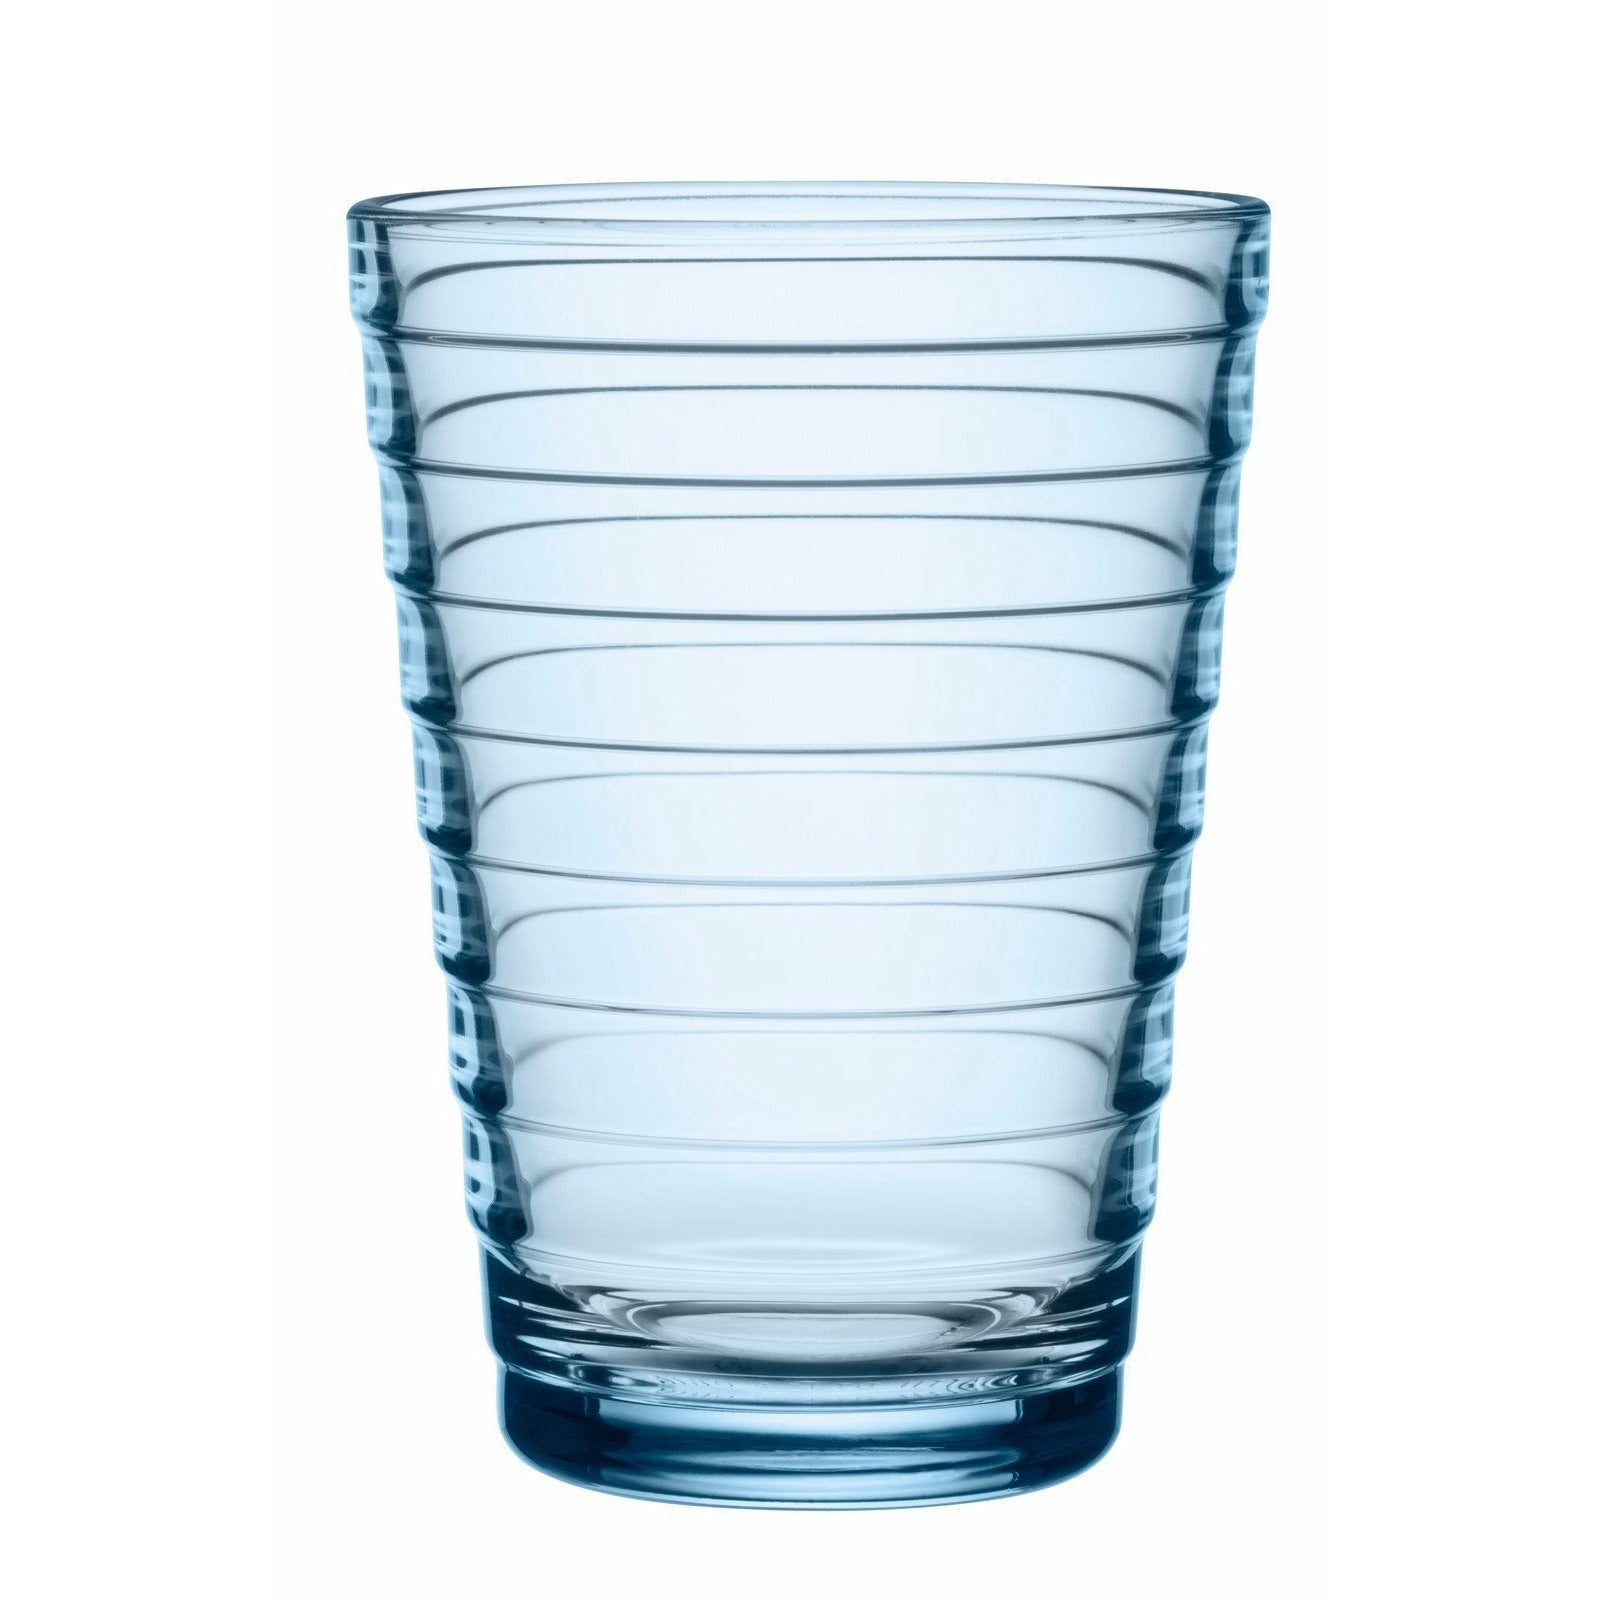 Iittala Aino Aalto Trinkglas Aqua 33cl, 2pcs.